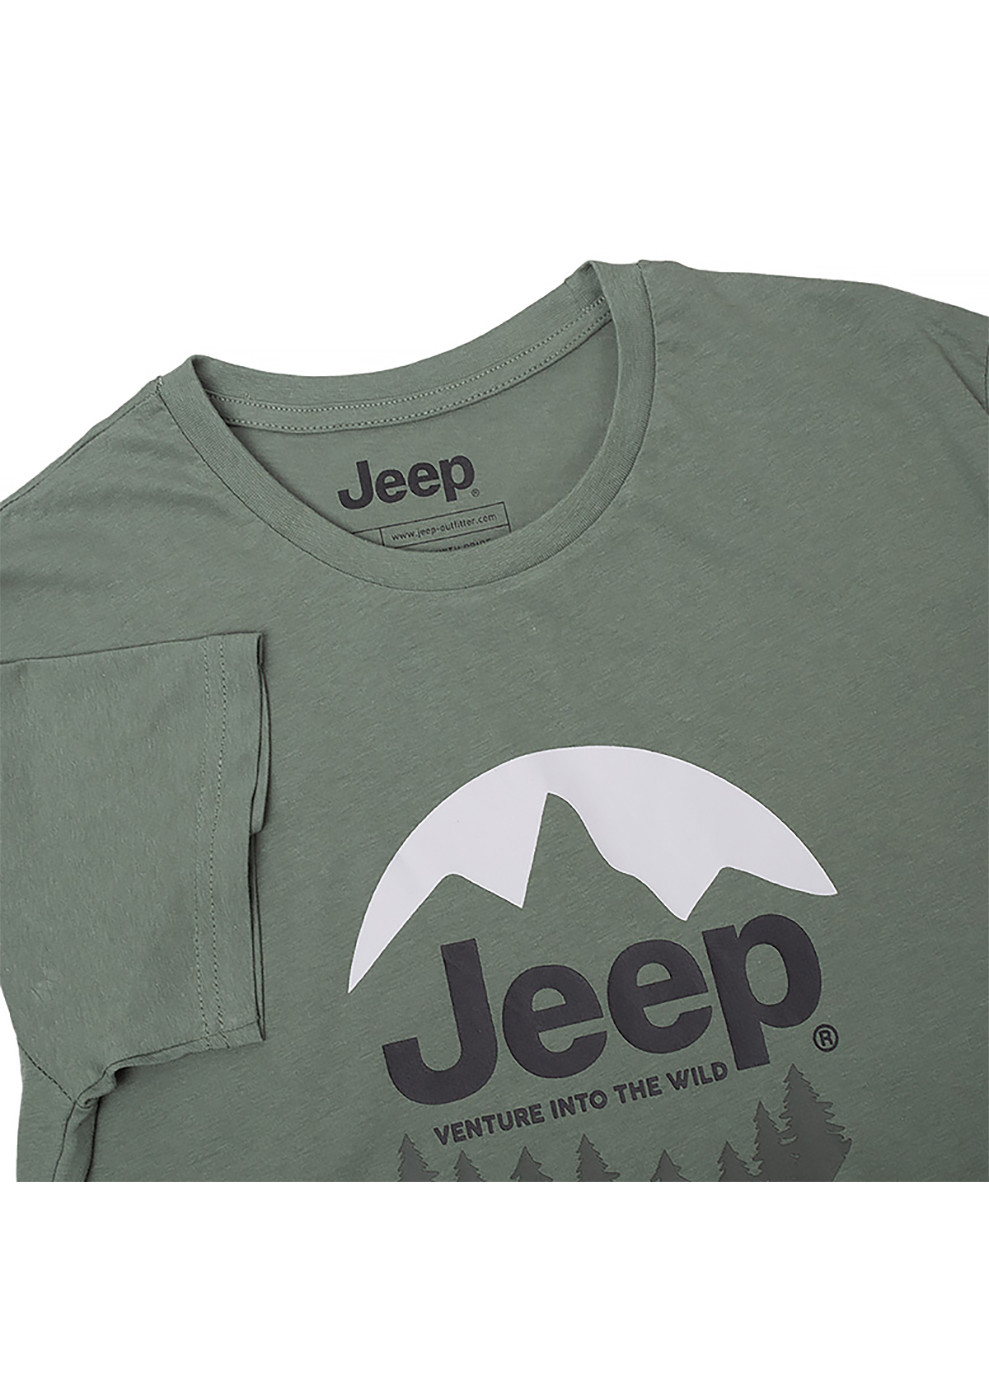 Хаки (оливковая) мужская футболка t-shirt the spirit of adventure хаки xl (o102588-e845 xl) Jeep